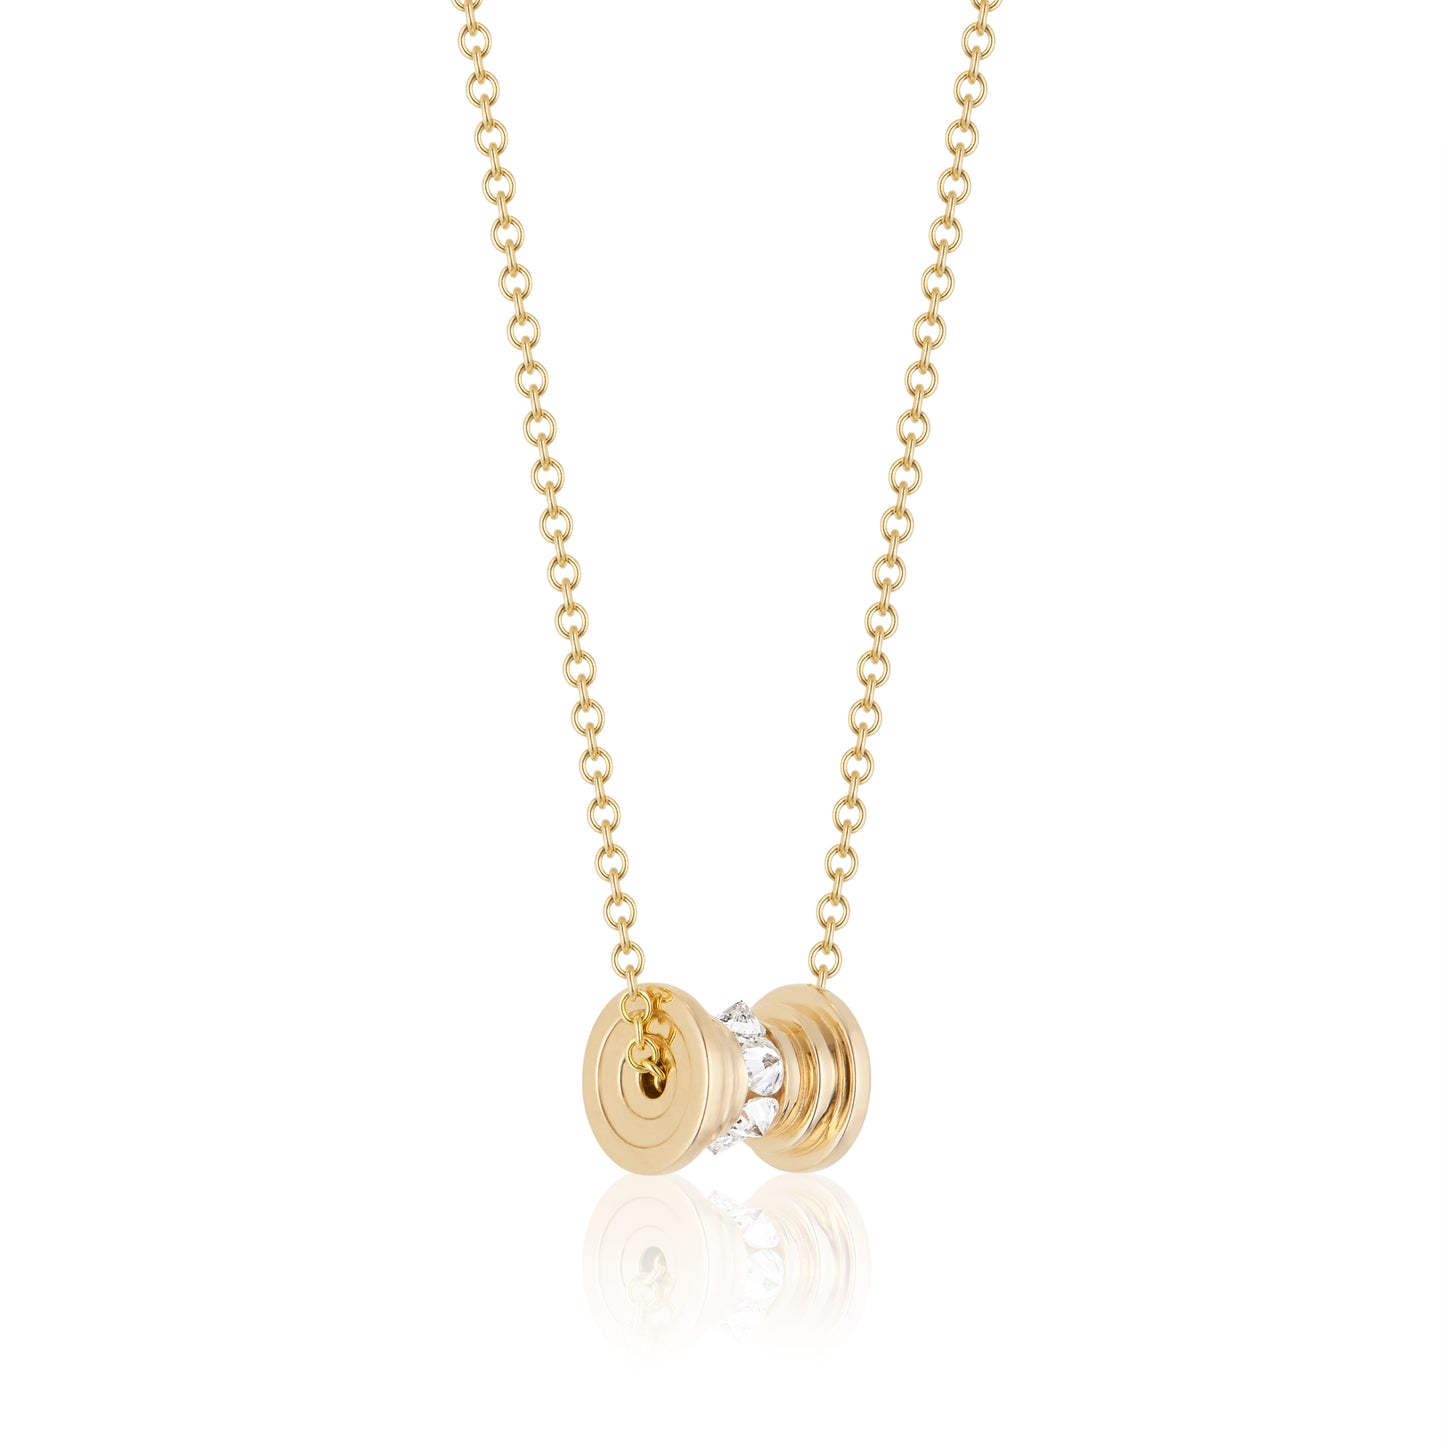 Jumbo 14k Gold Graduated Hourglass Necklace